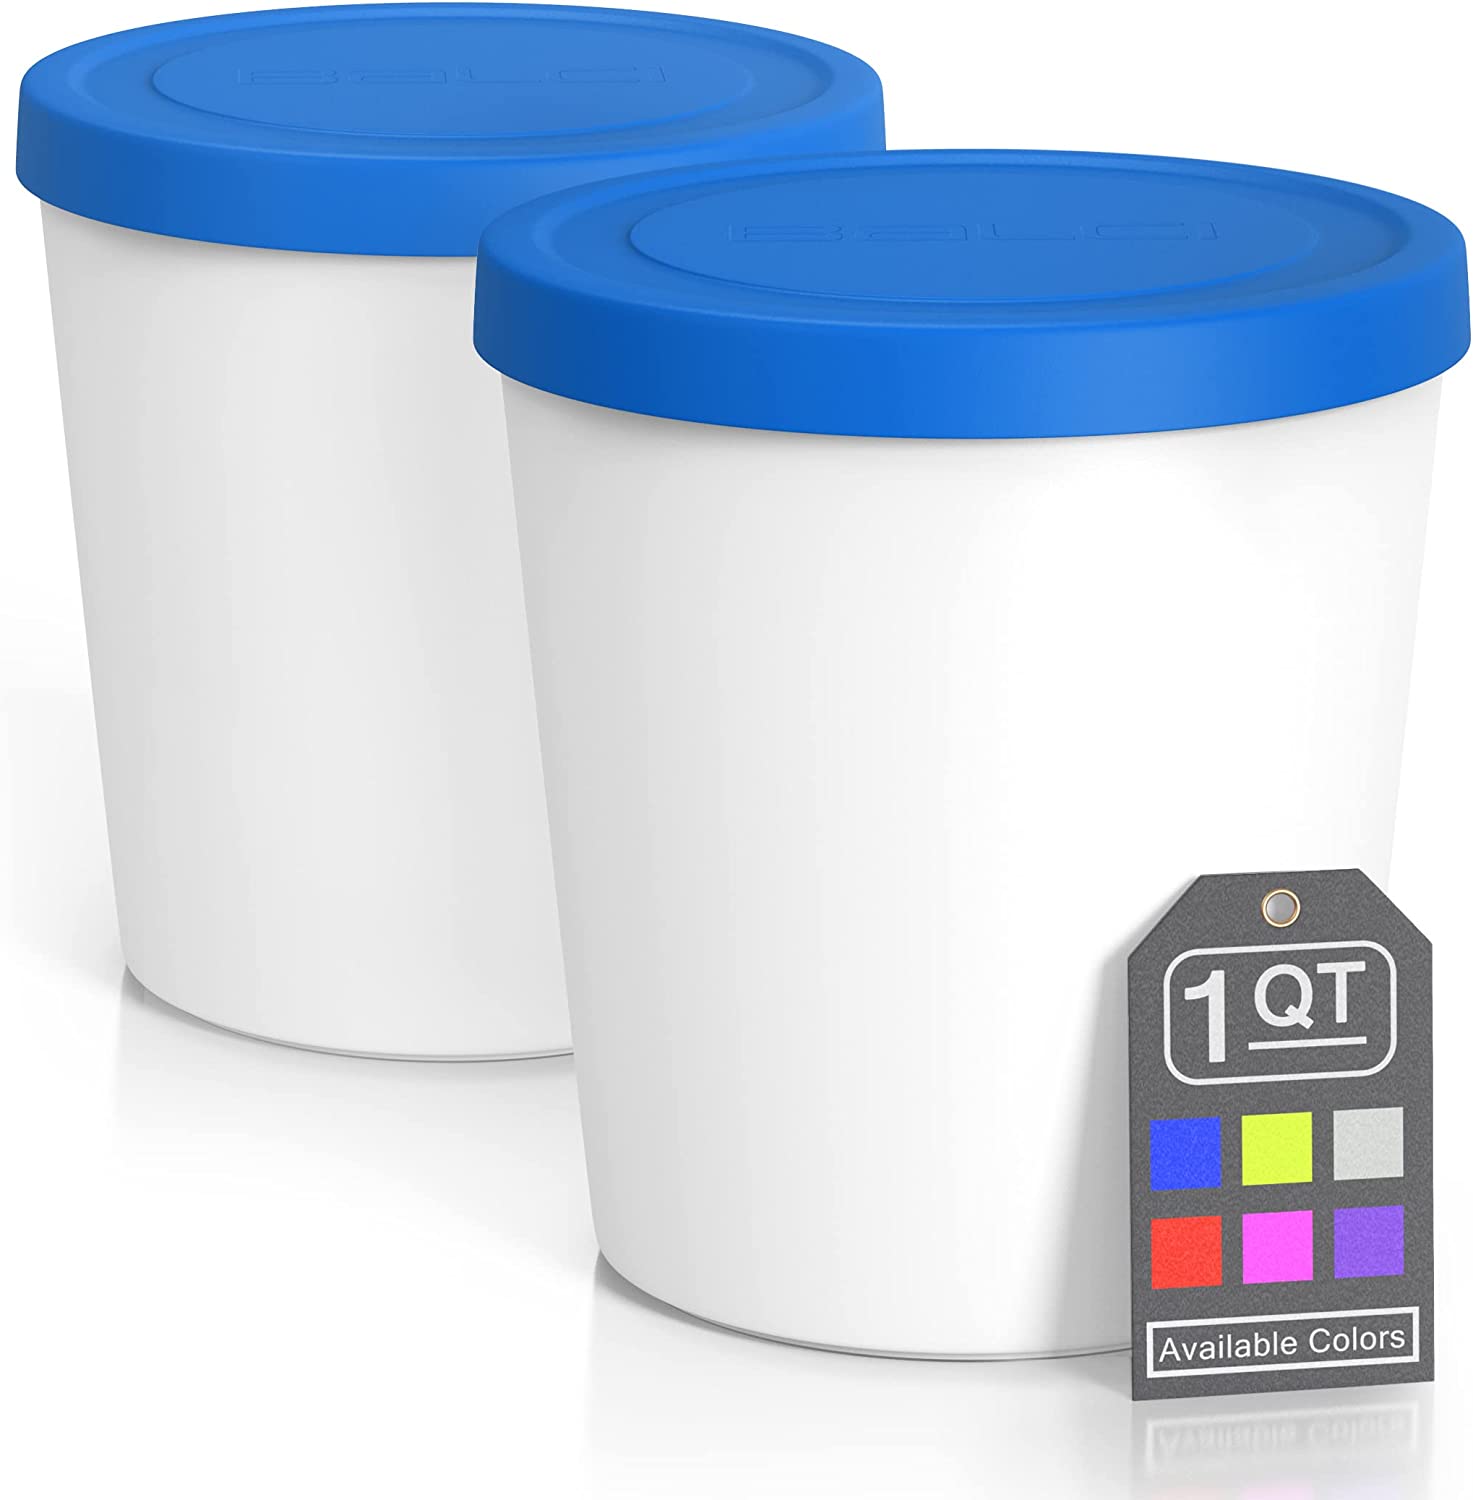 Sumo Ice Cream Containers for Homemade Ice Cream - 15 Quart, Reusable Freezer Storage (2 Containers, Red)